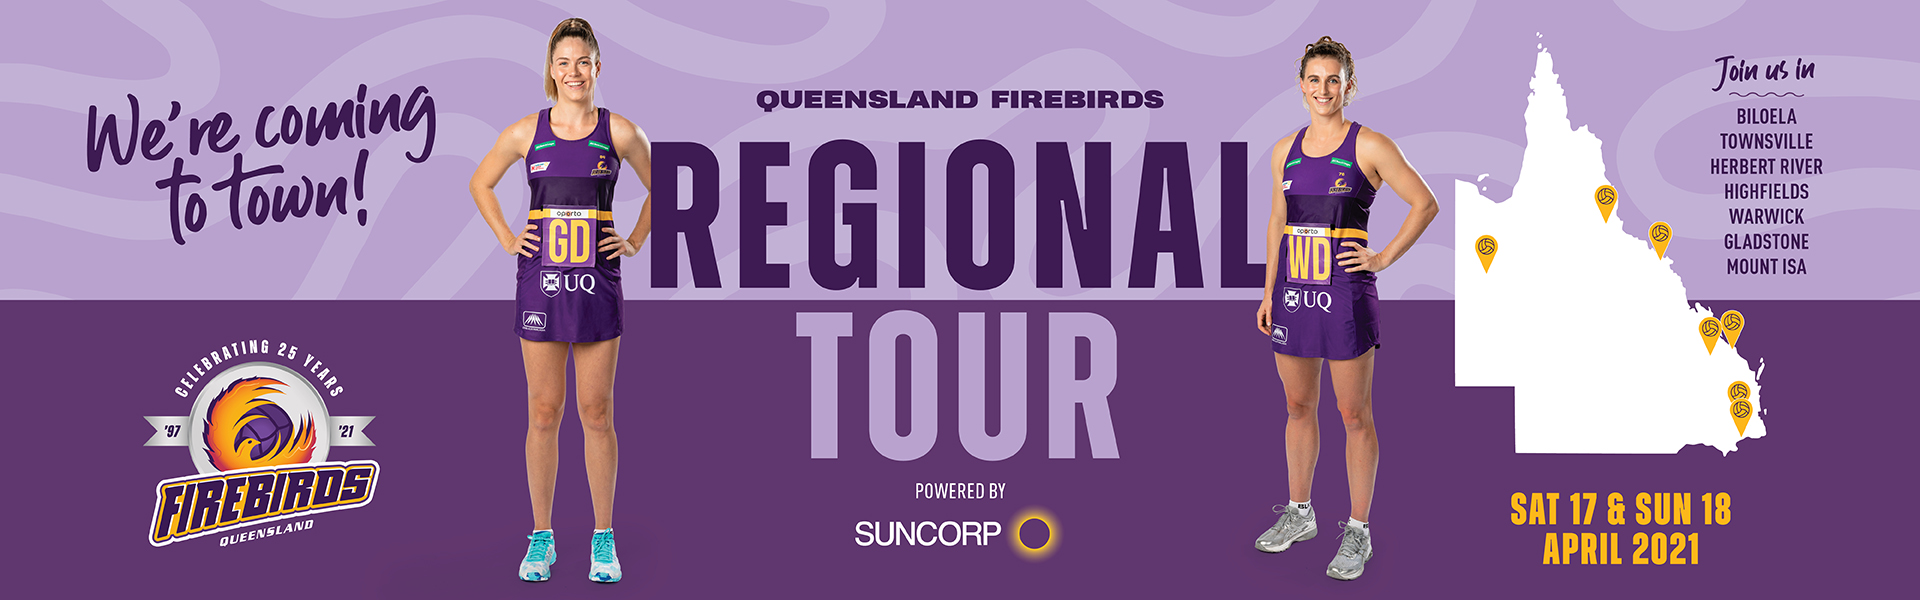 Firebirds to fly regional The Home of the Queensland Firebirds